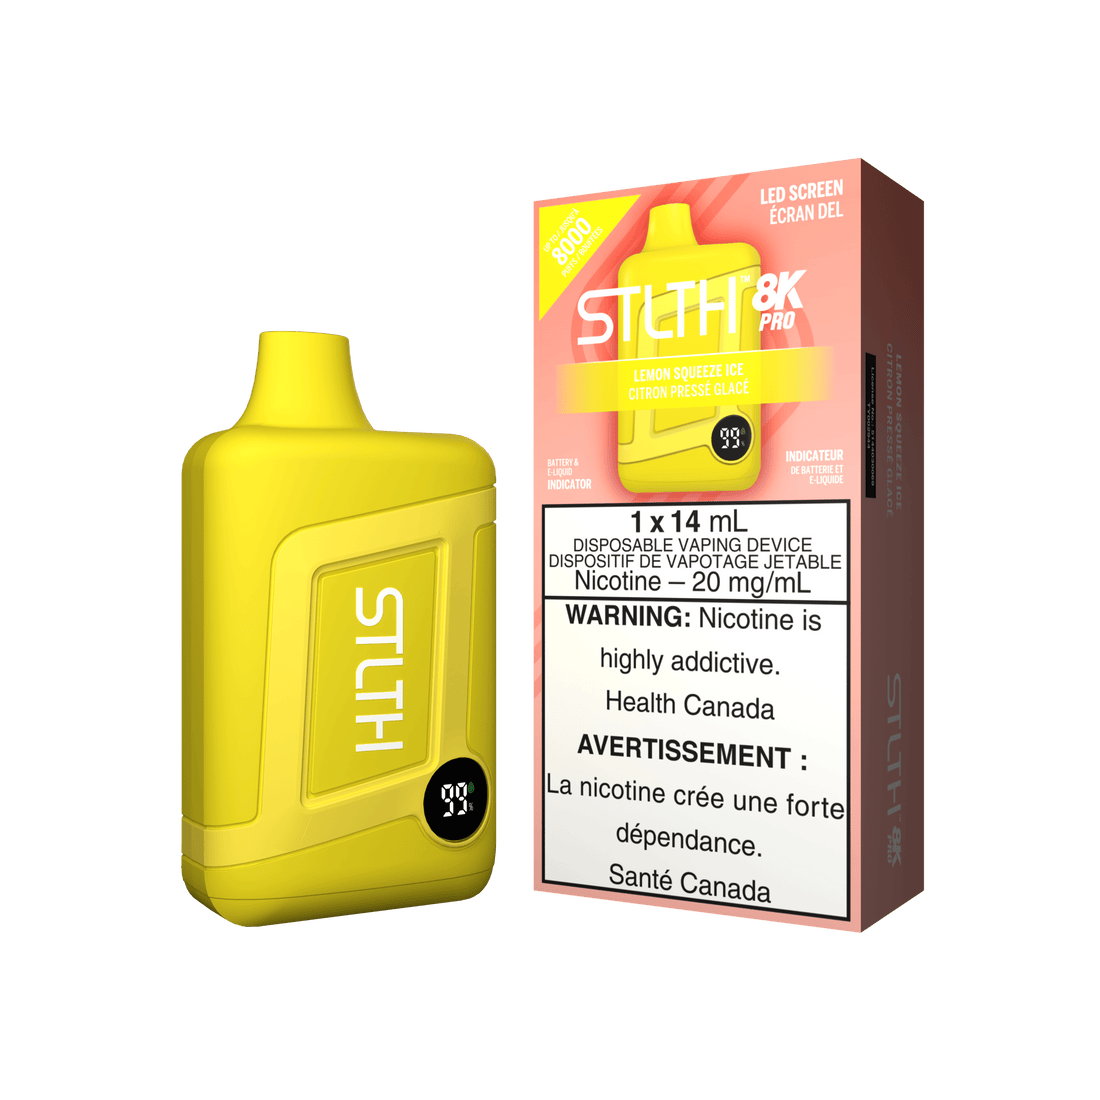 STLTH 8K Pro - Lemon Squeeze Ice - Vapor Shoppe